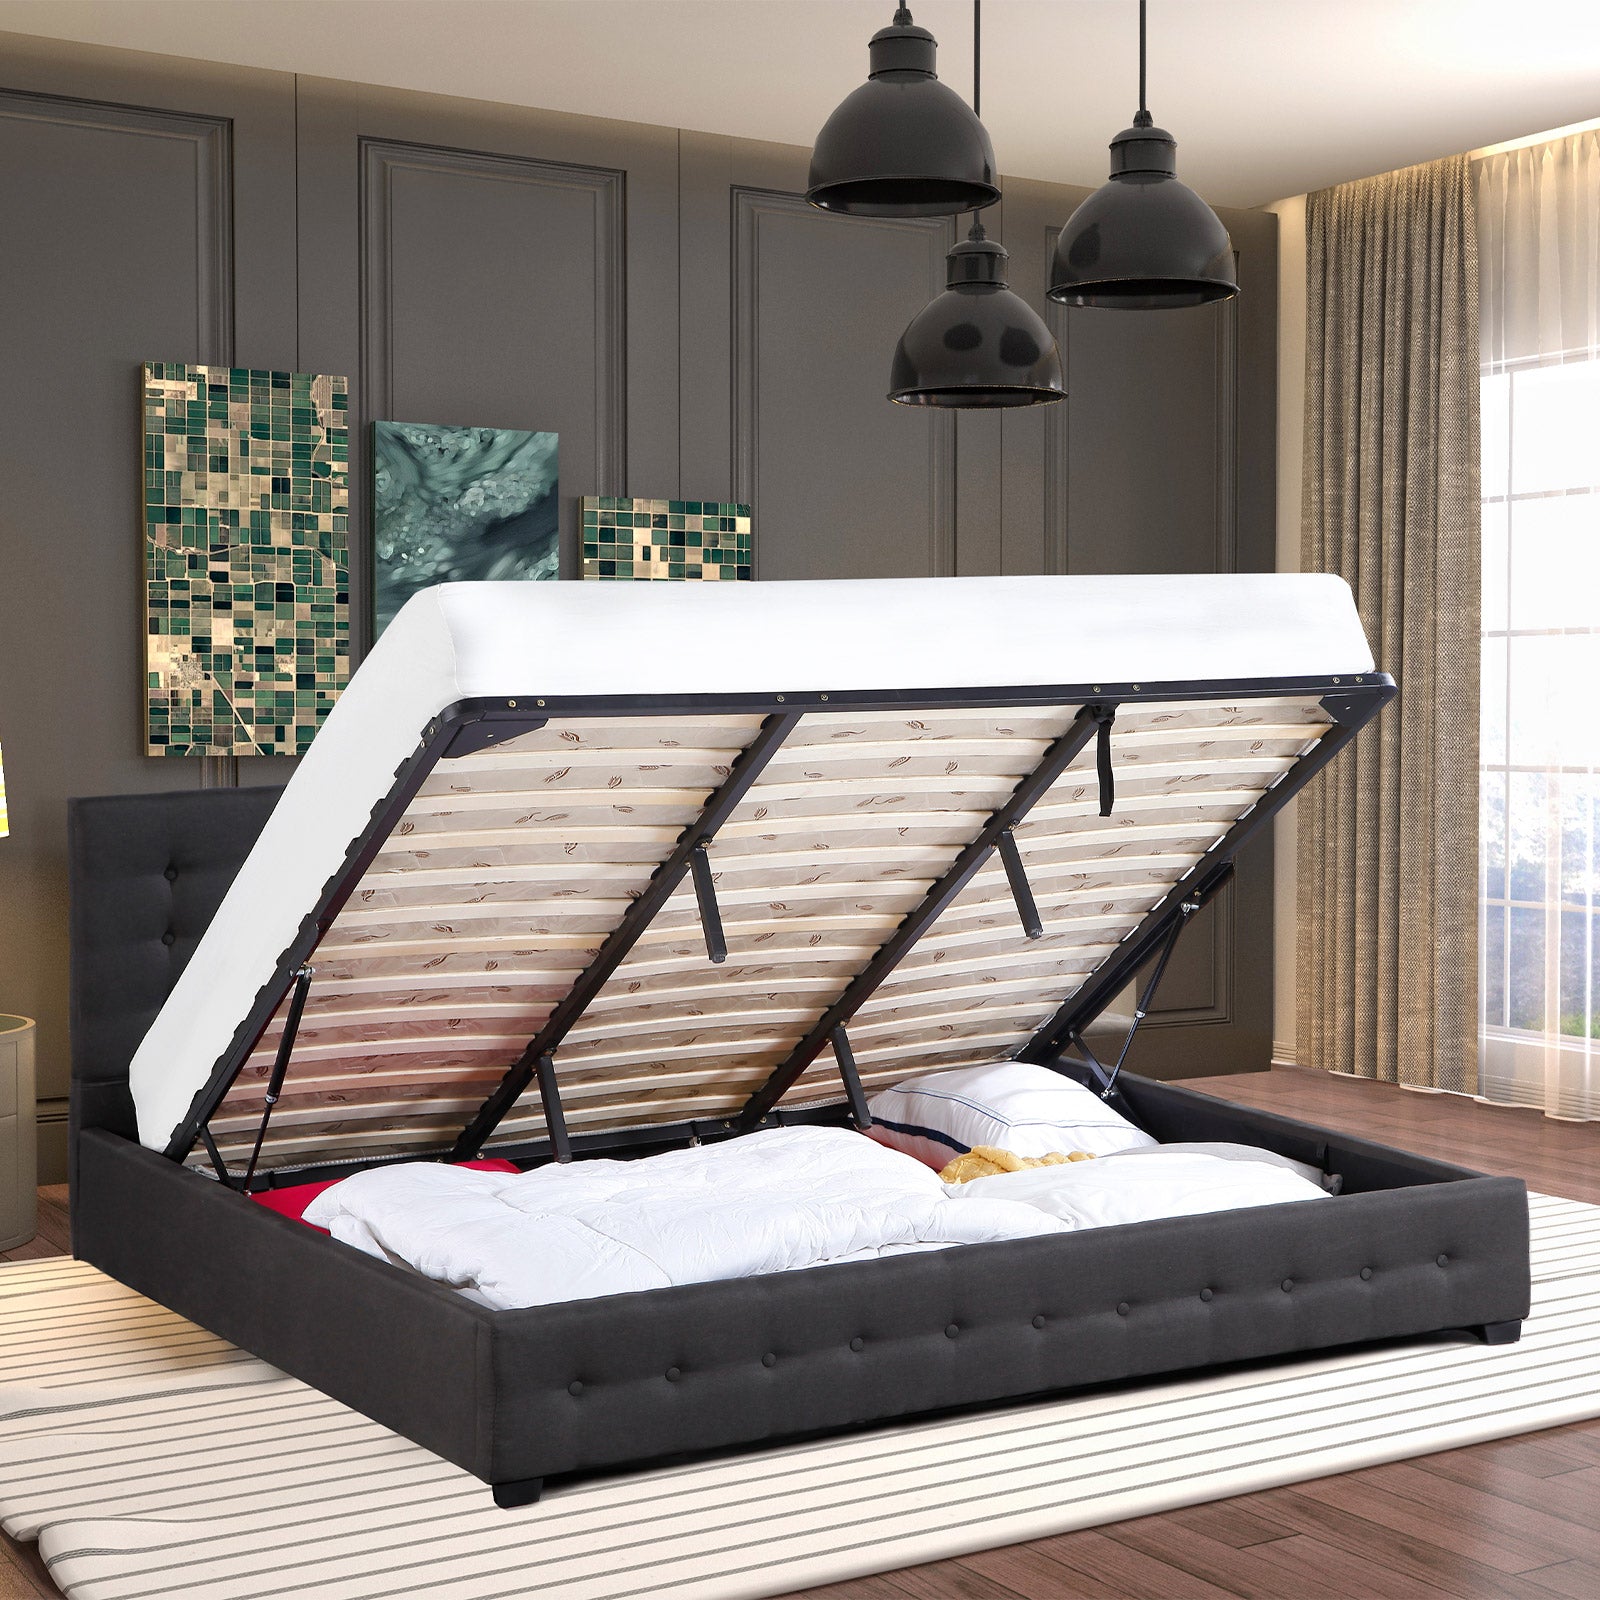 Milano Decor Eden Gas Lift Bed With Headboard Platform Storage Dark Grey Fabric - King Single - Dark Grey